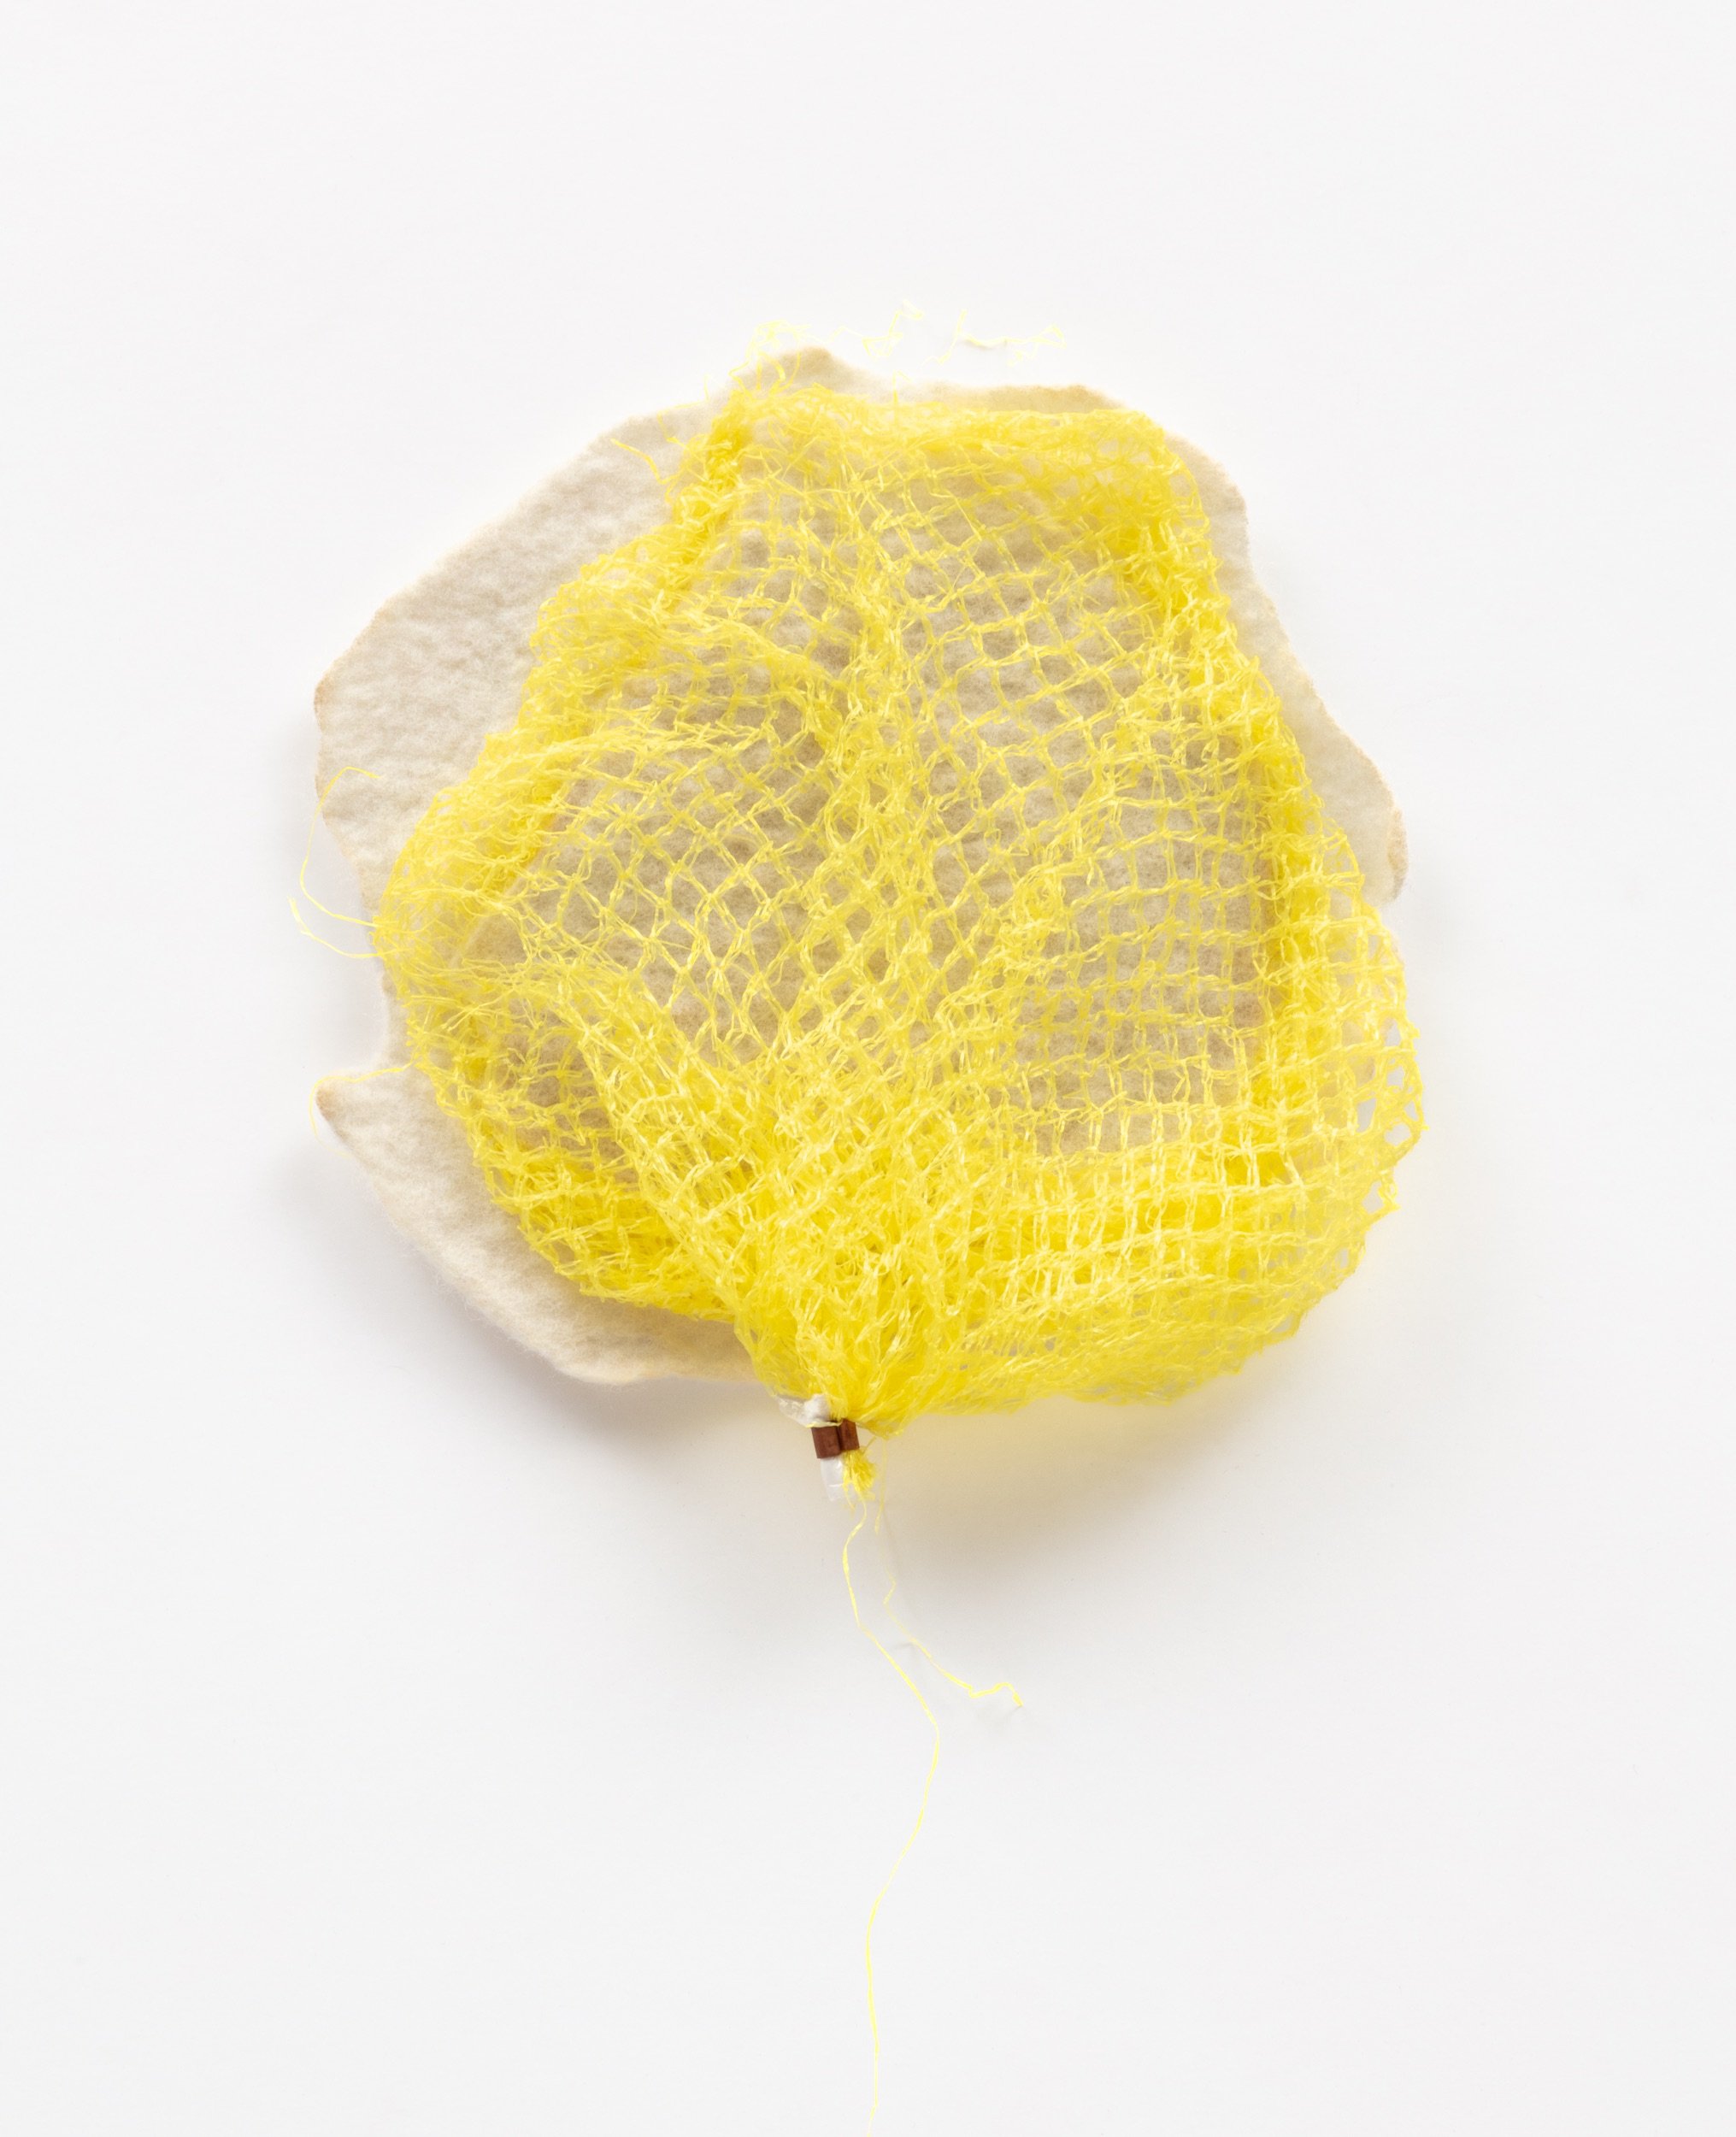  Untitled, 2021  Handfelted merino wool, plastic produce net 